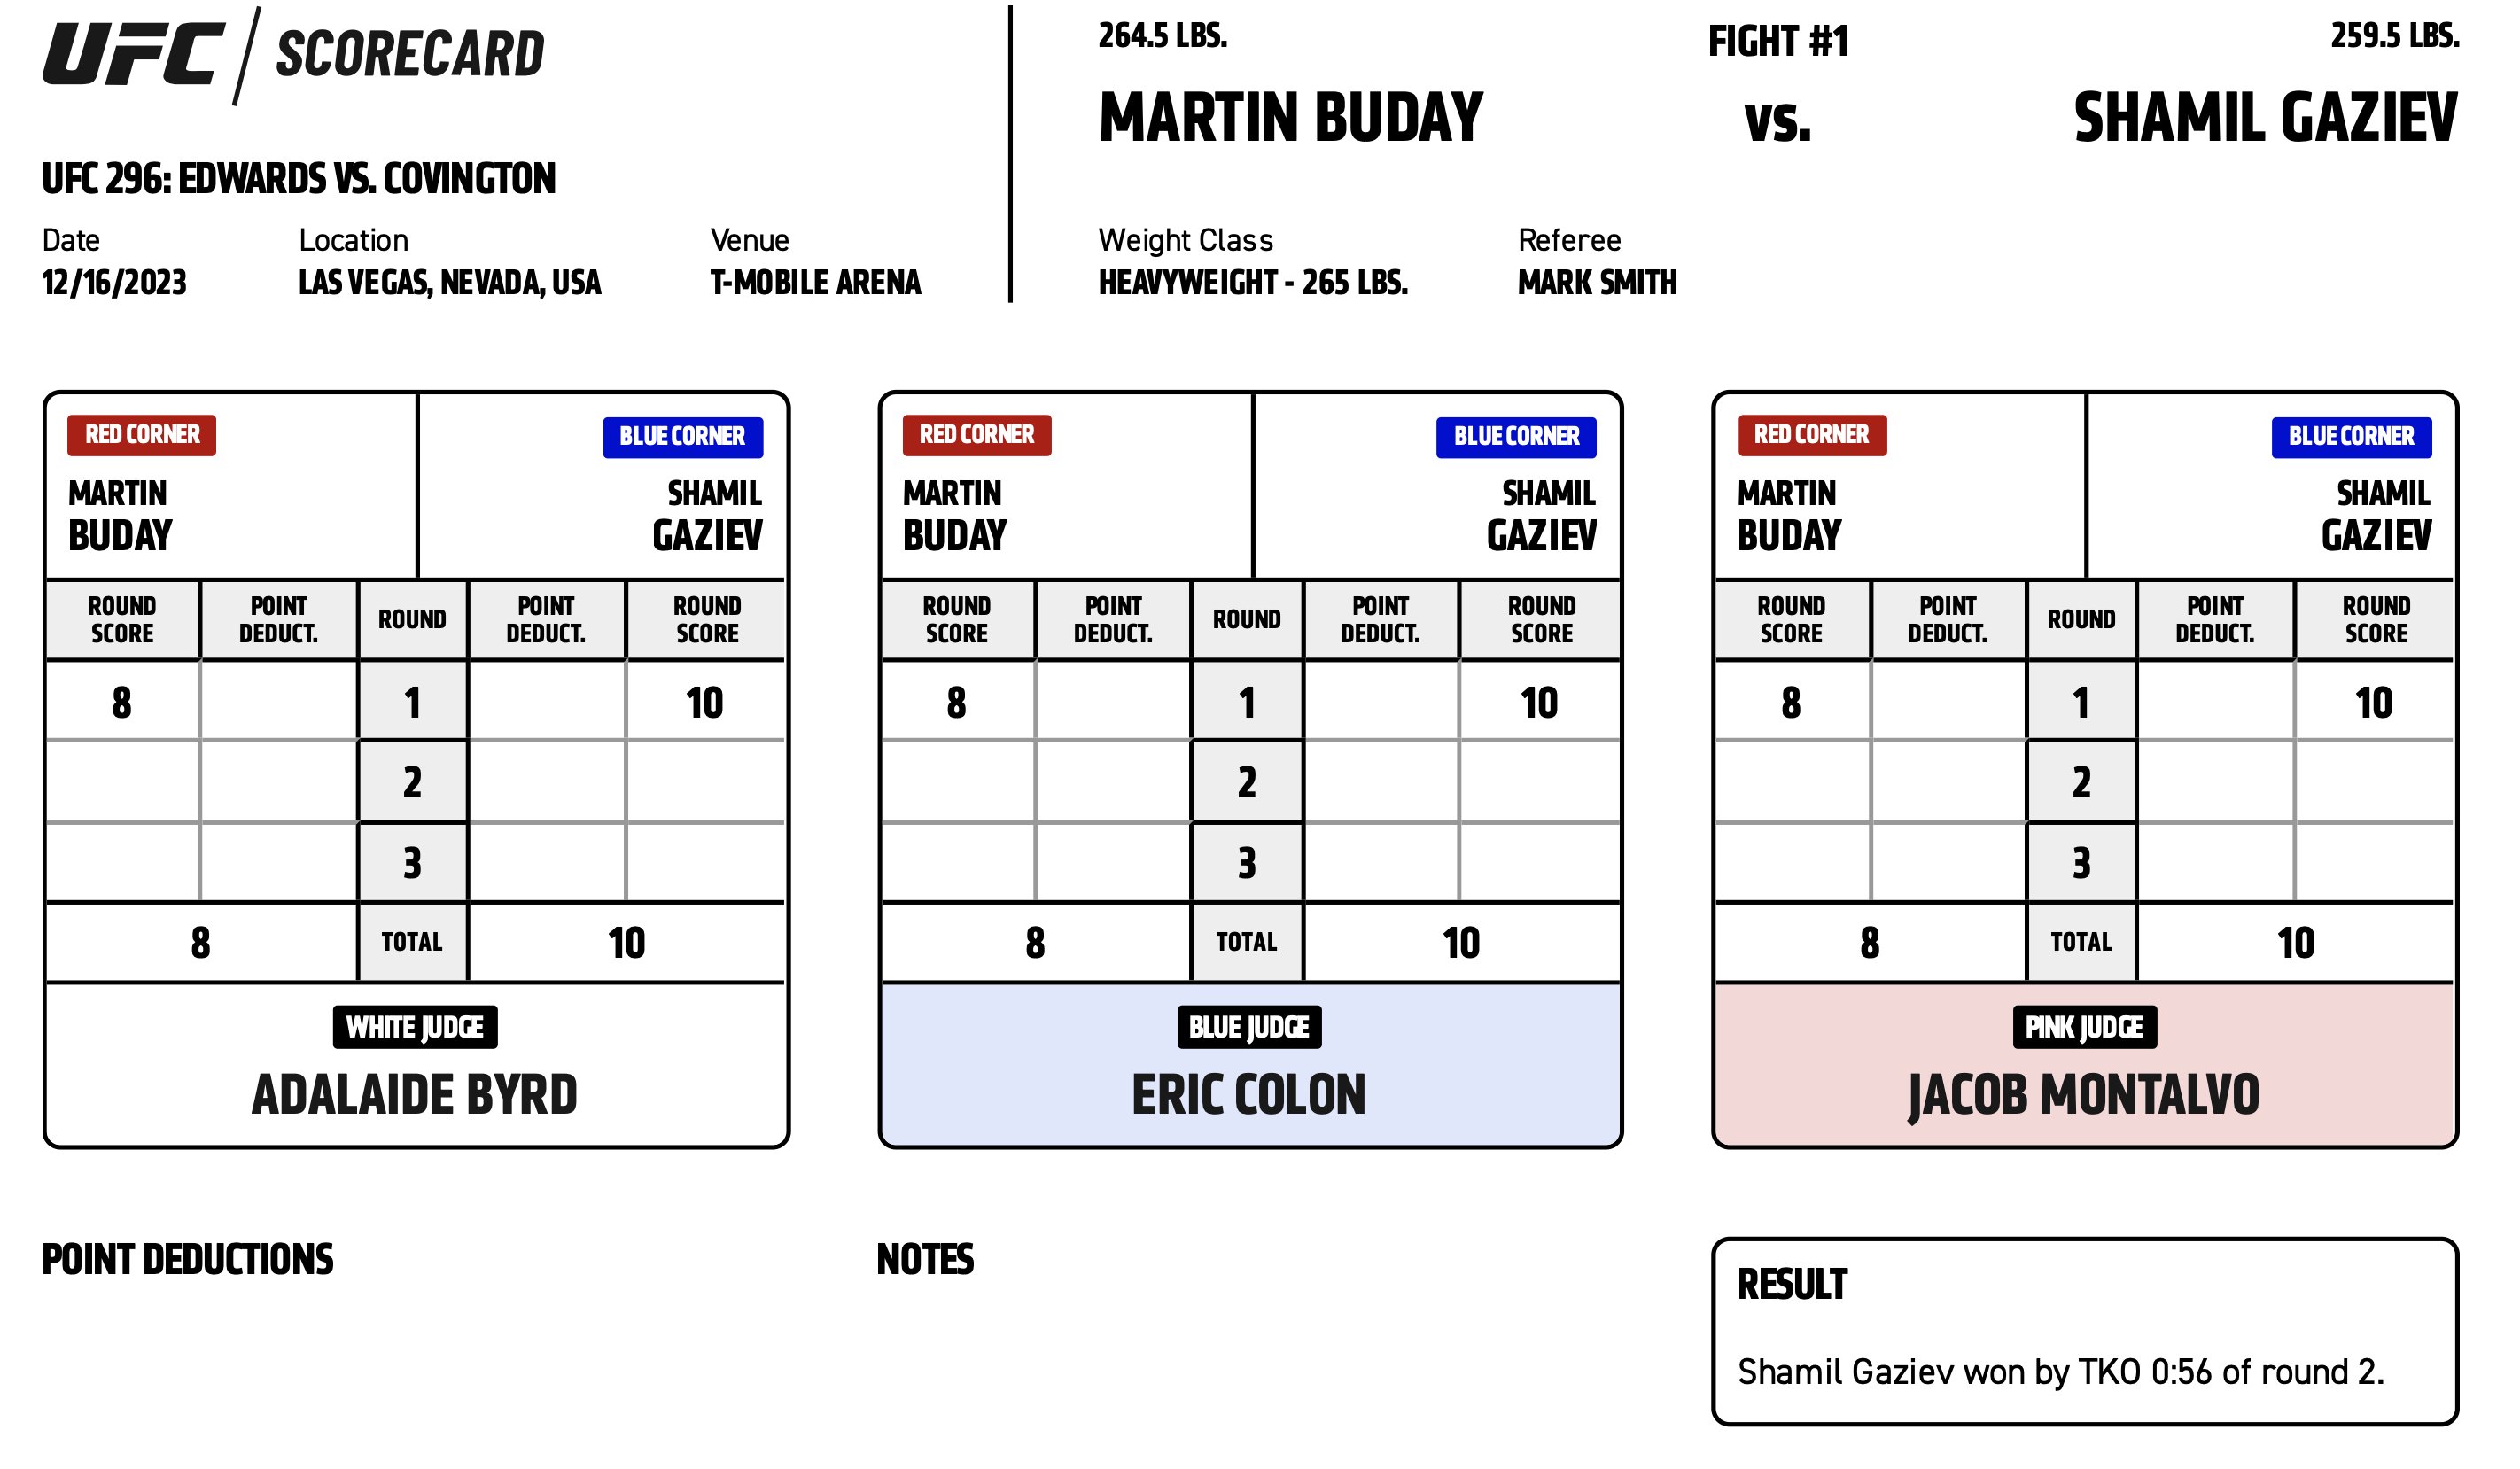 Scorecard : Combat Categorie - Poids Lourds : Martin Buday vs. Shamil Gaziev - UFC 296 - EDWARDS VS. COVINGTON